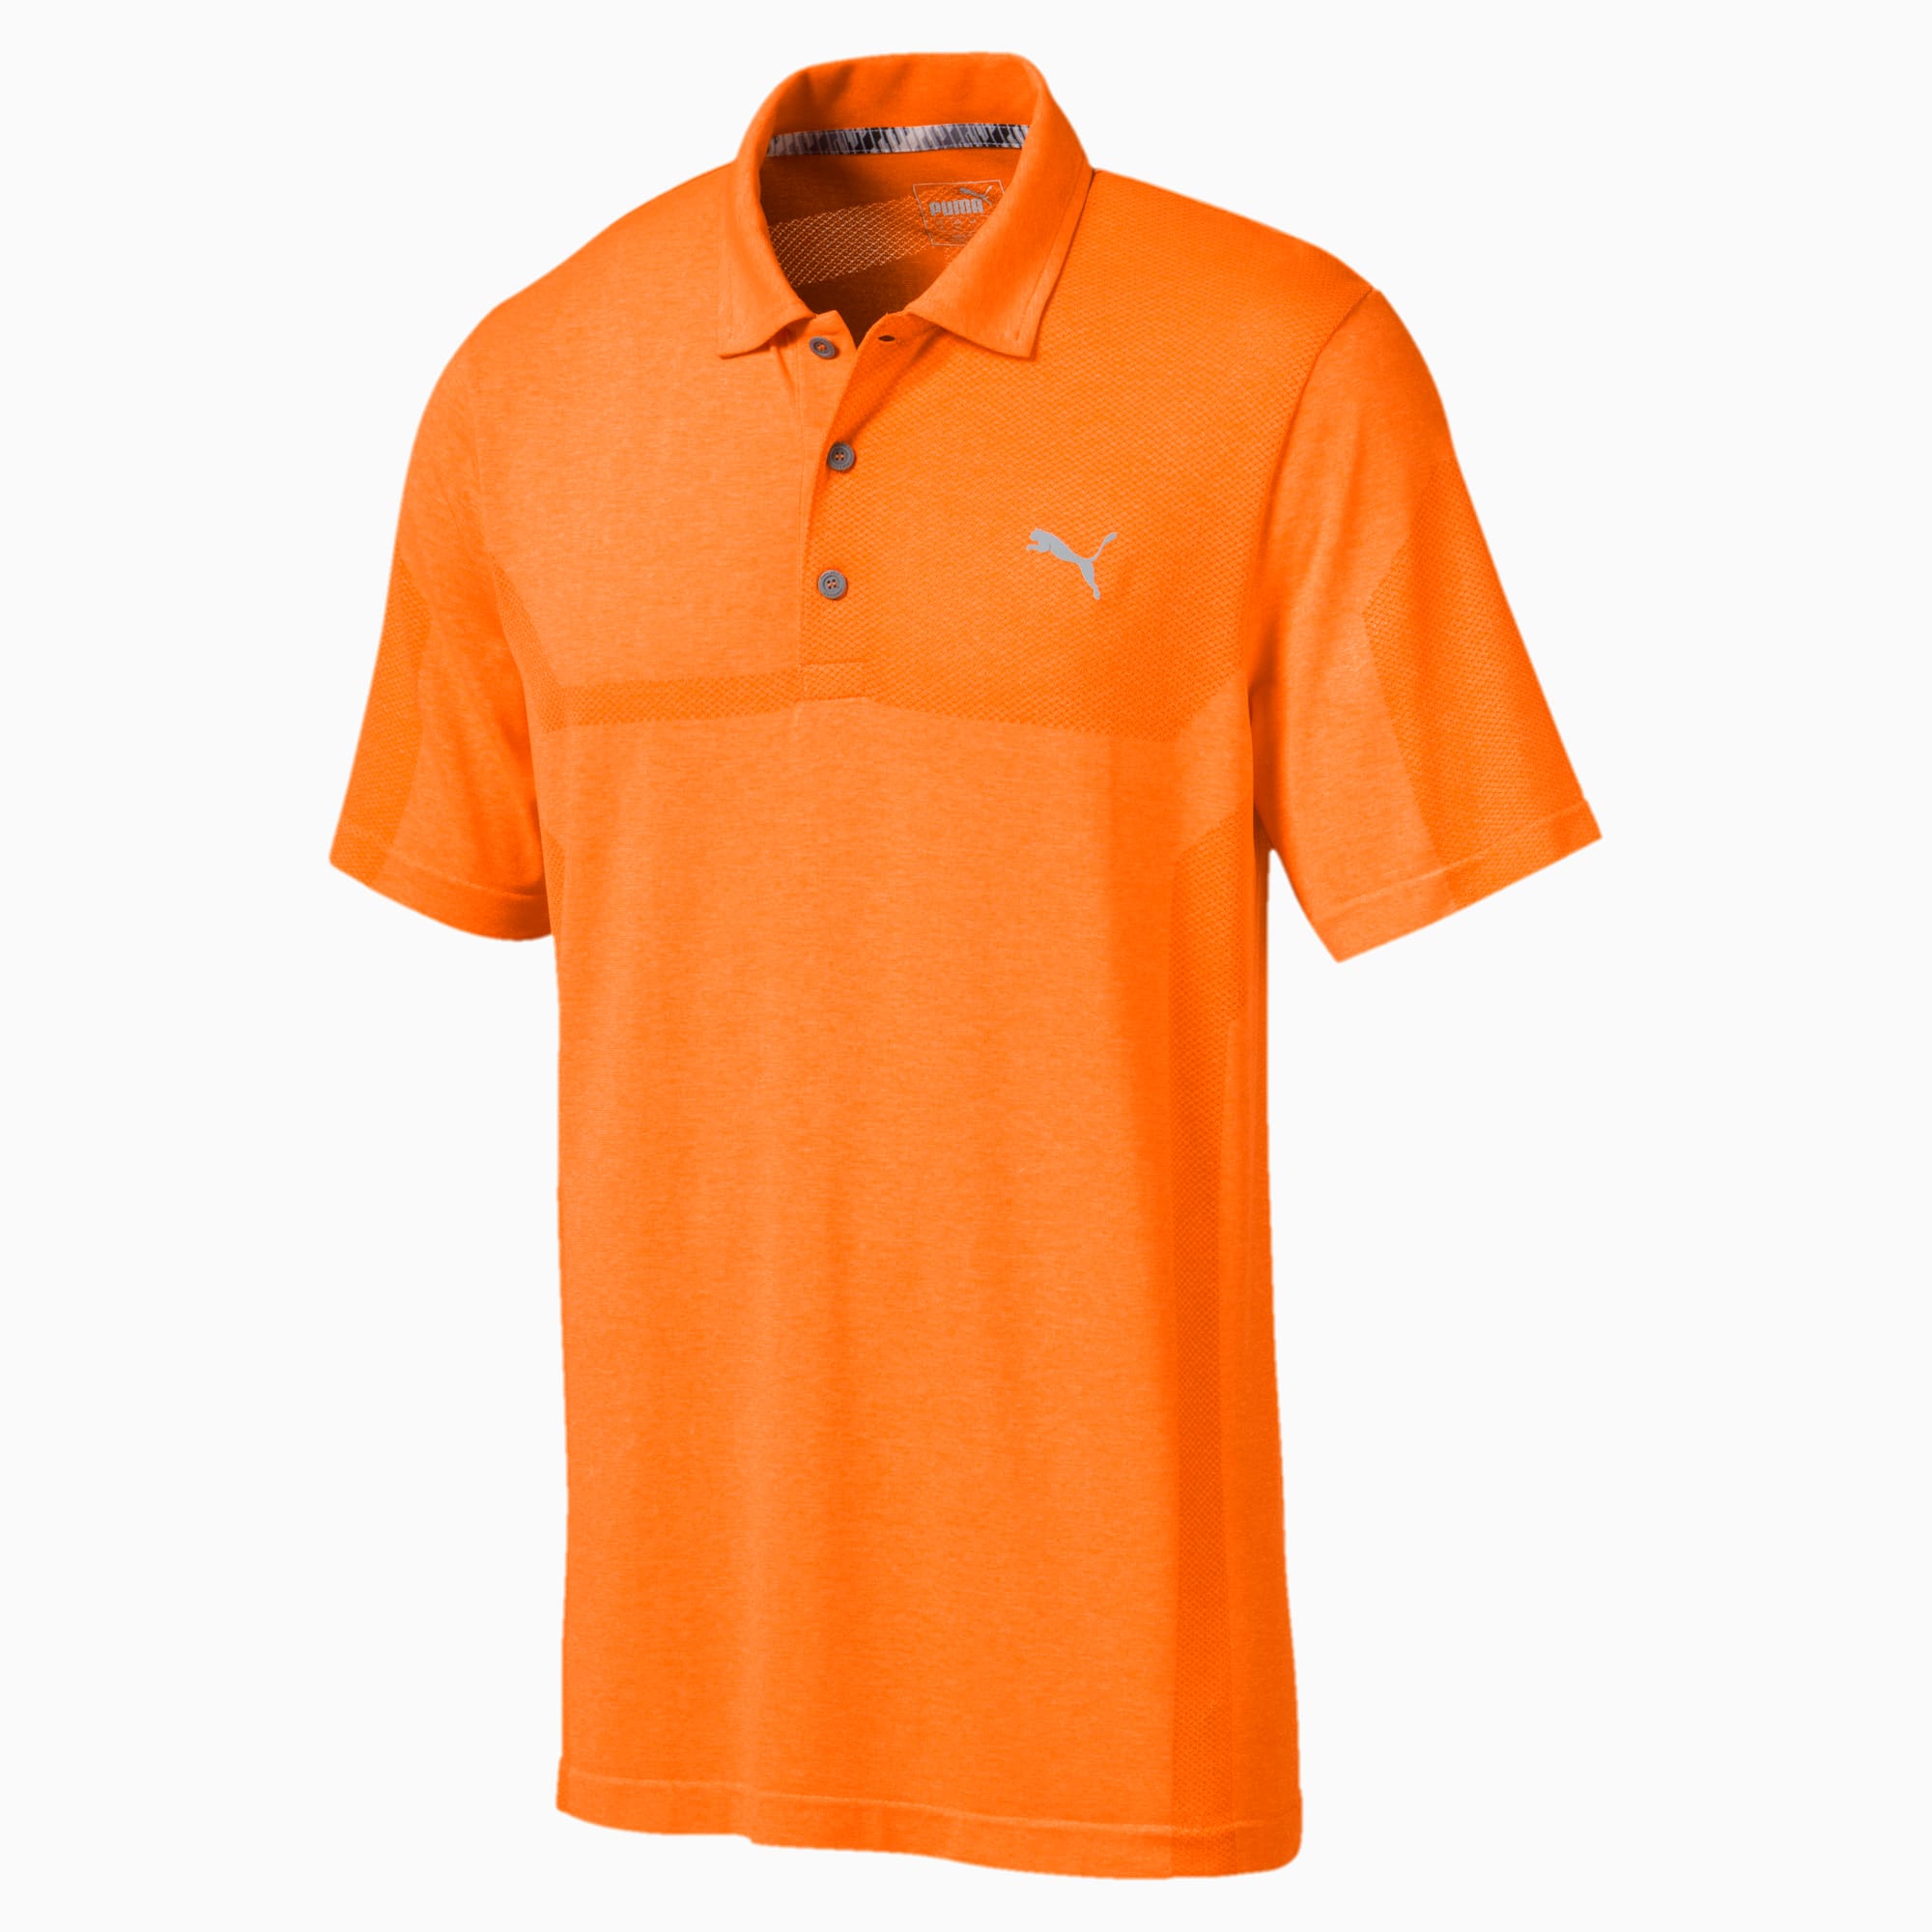 evoKNIT Breakers Men's Golf Polo, Vibrant Orange, large-SEA